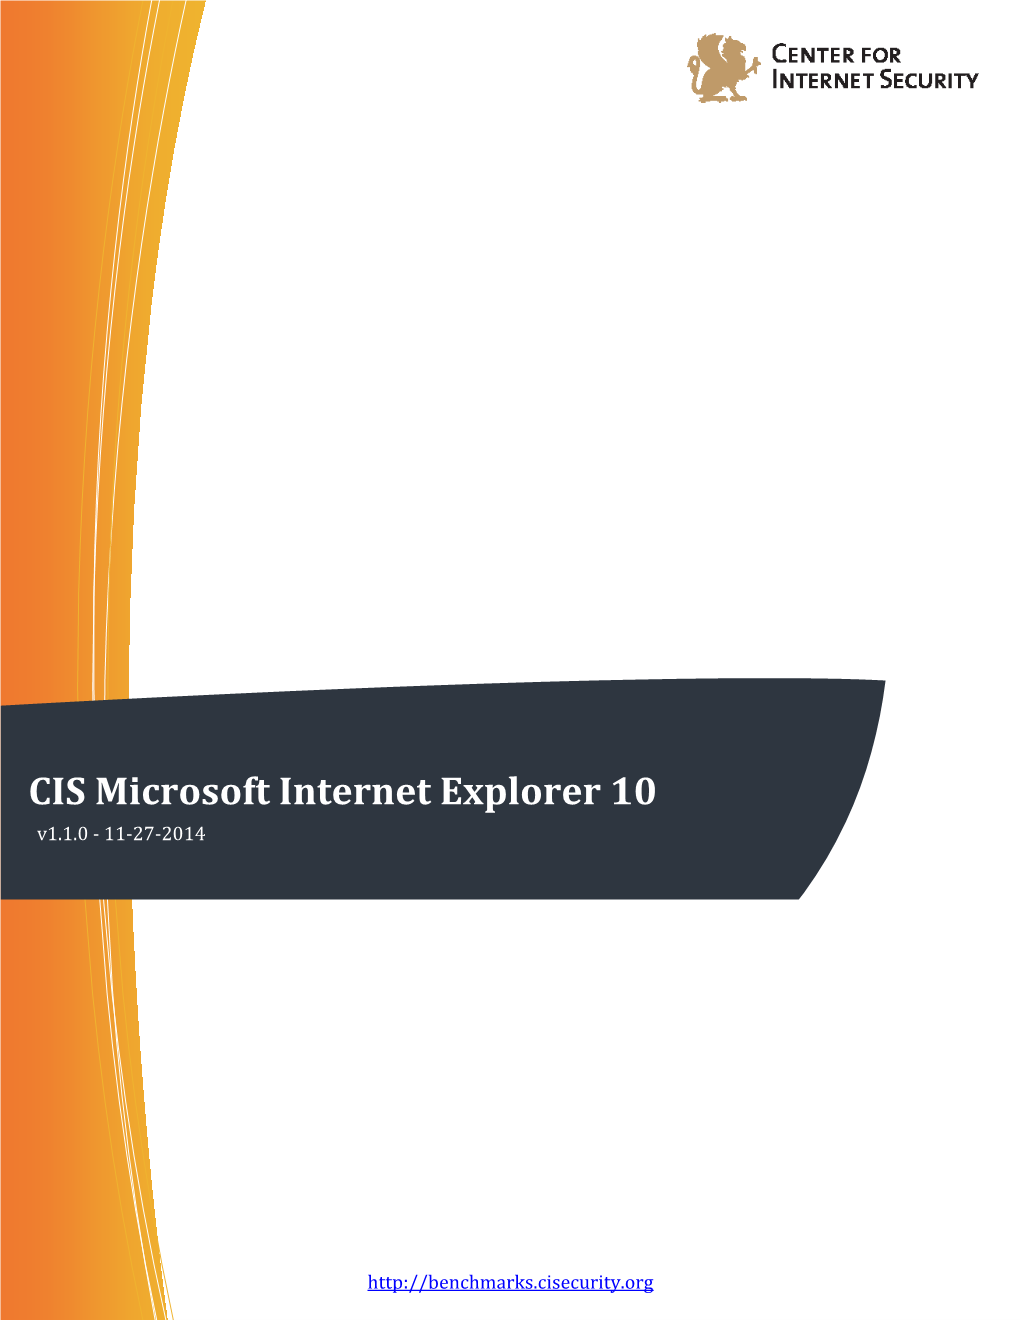 CIS Microsoft Internet Explorer 10 Benchmarkv1.1.0 - 11-27-2014